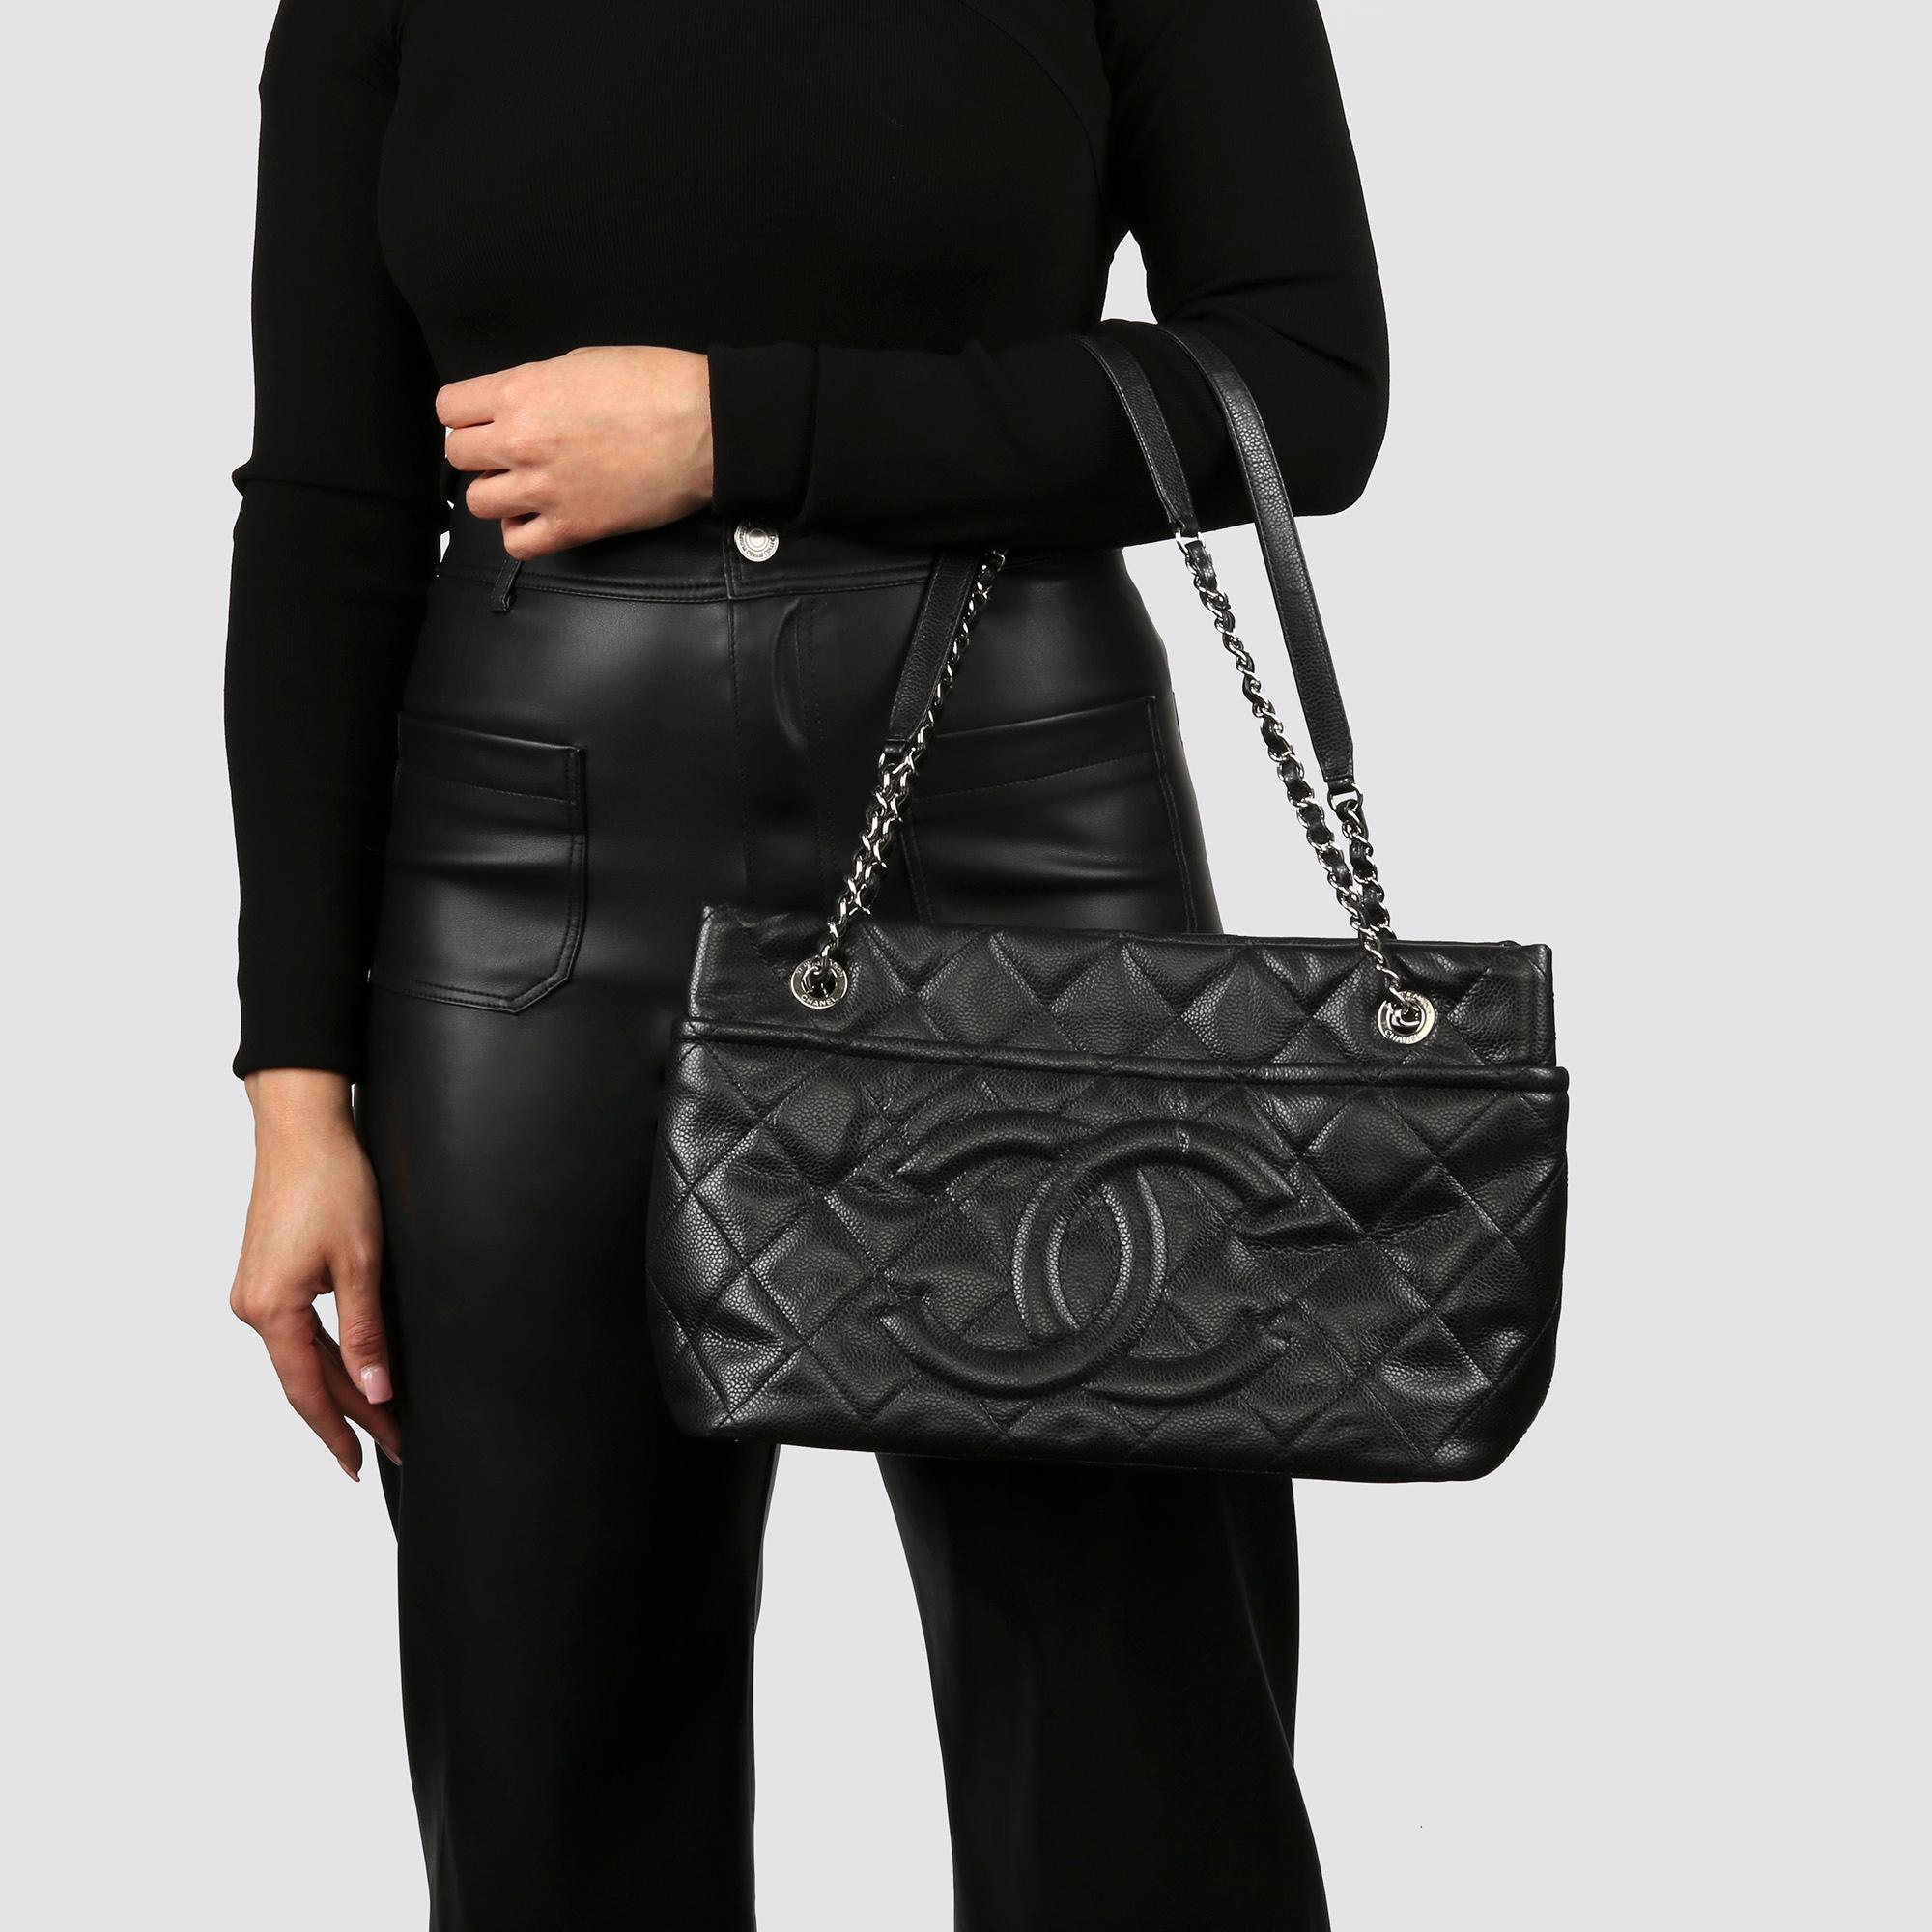 2012 Chanel Black Quilted Caviar Leather Timeless Shoulder Bag  7